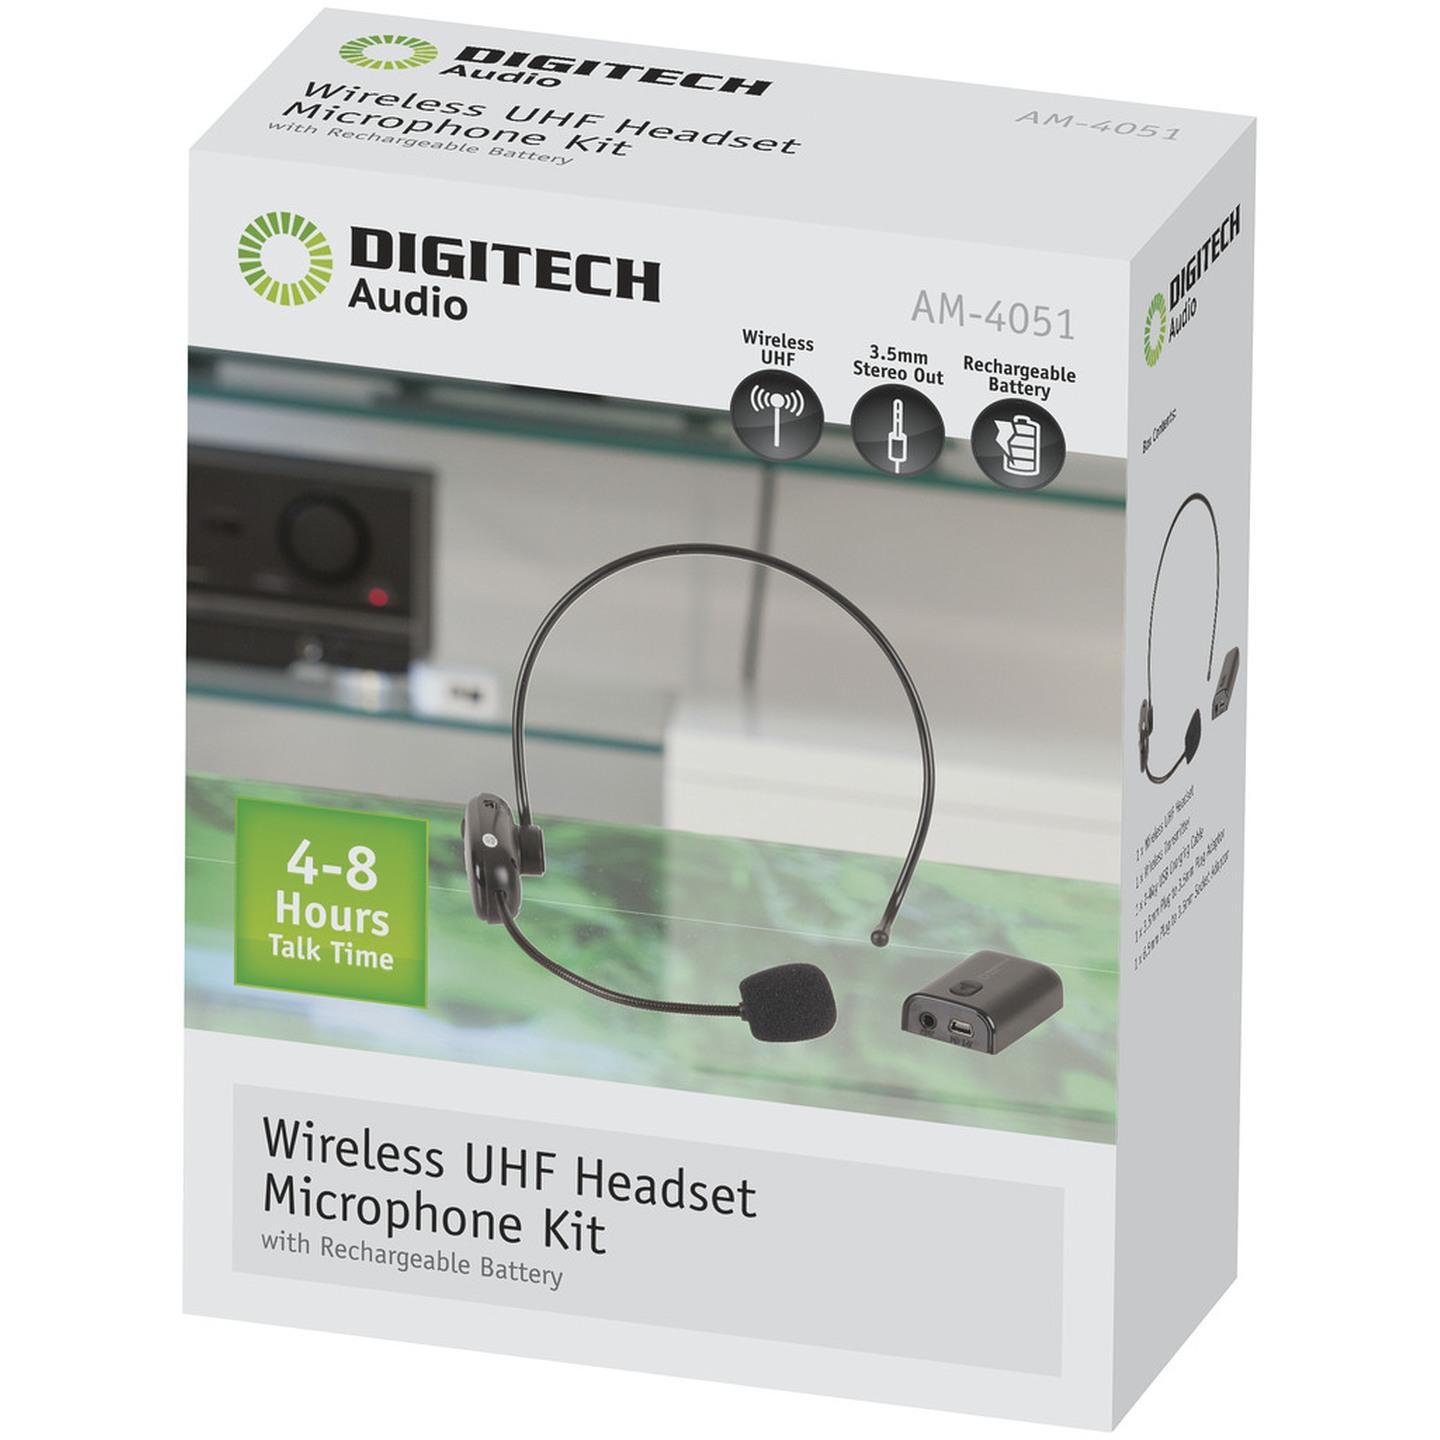 Digitech UHF Headset Microphone Kit